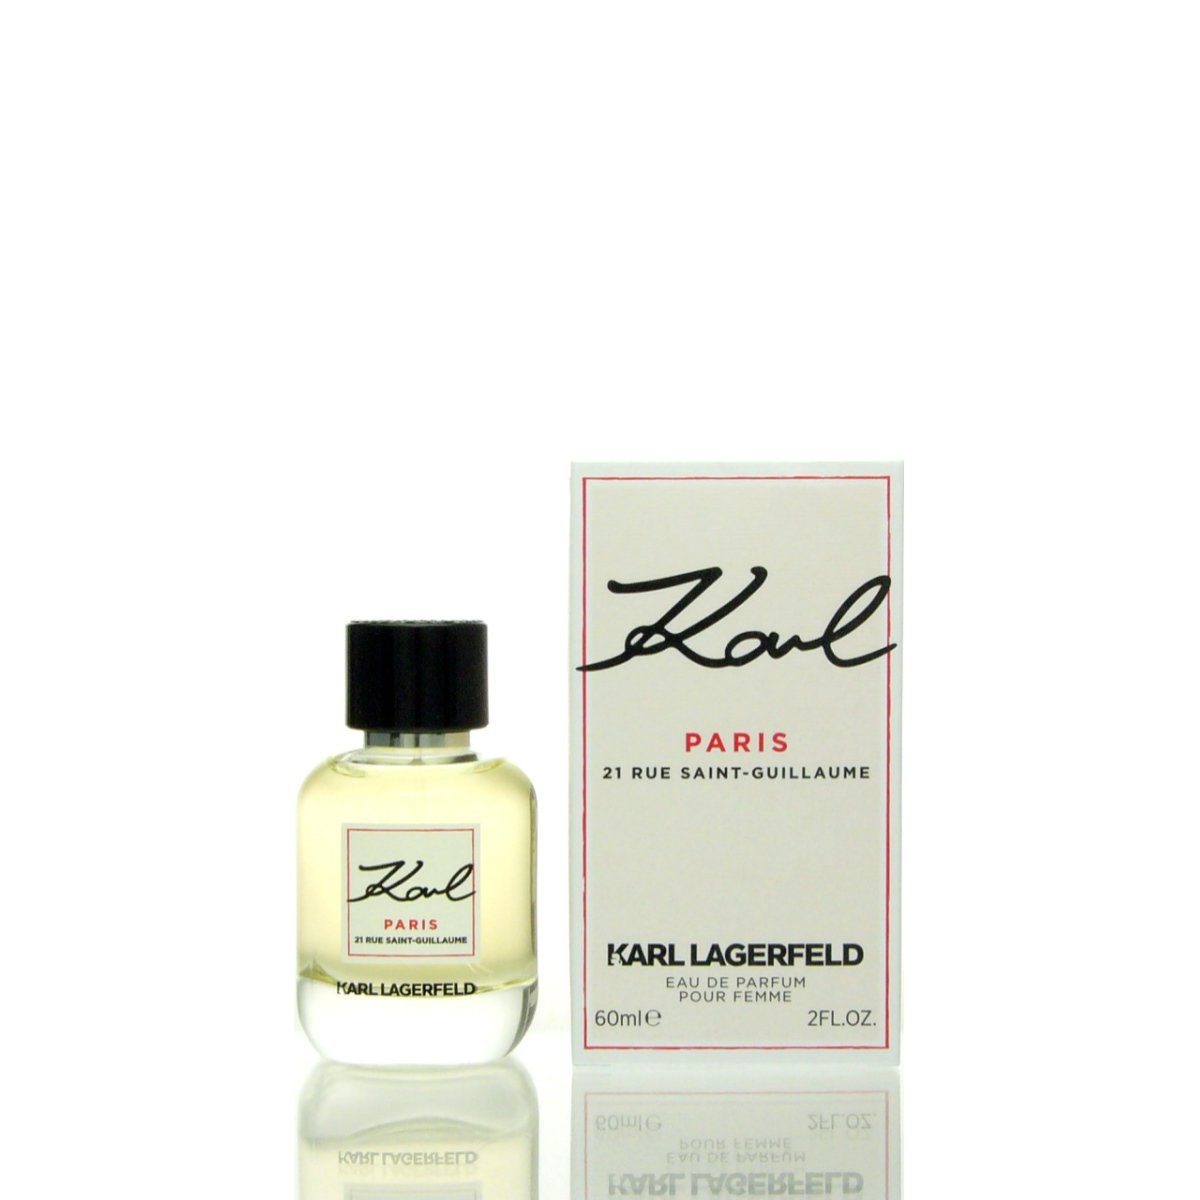 Parfum Paris Karl de ml 60 LAGERFELD Lagerfeld Eau de Rue 21 Karl KARL Saint-Guillaume Eau Parfum